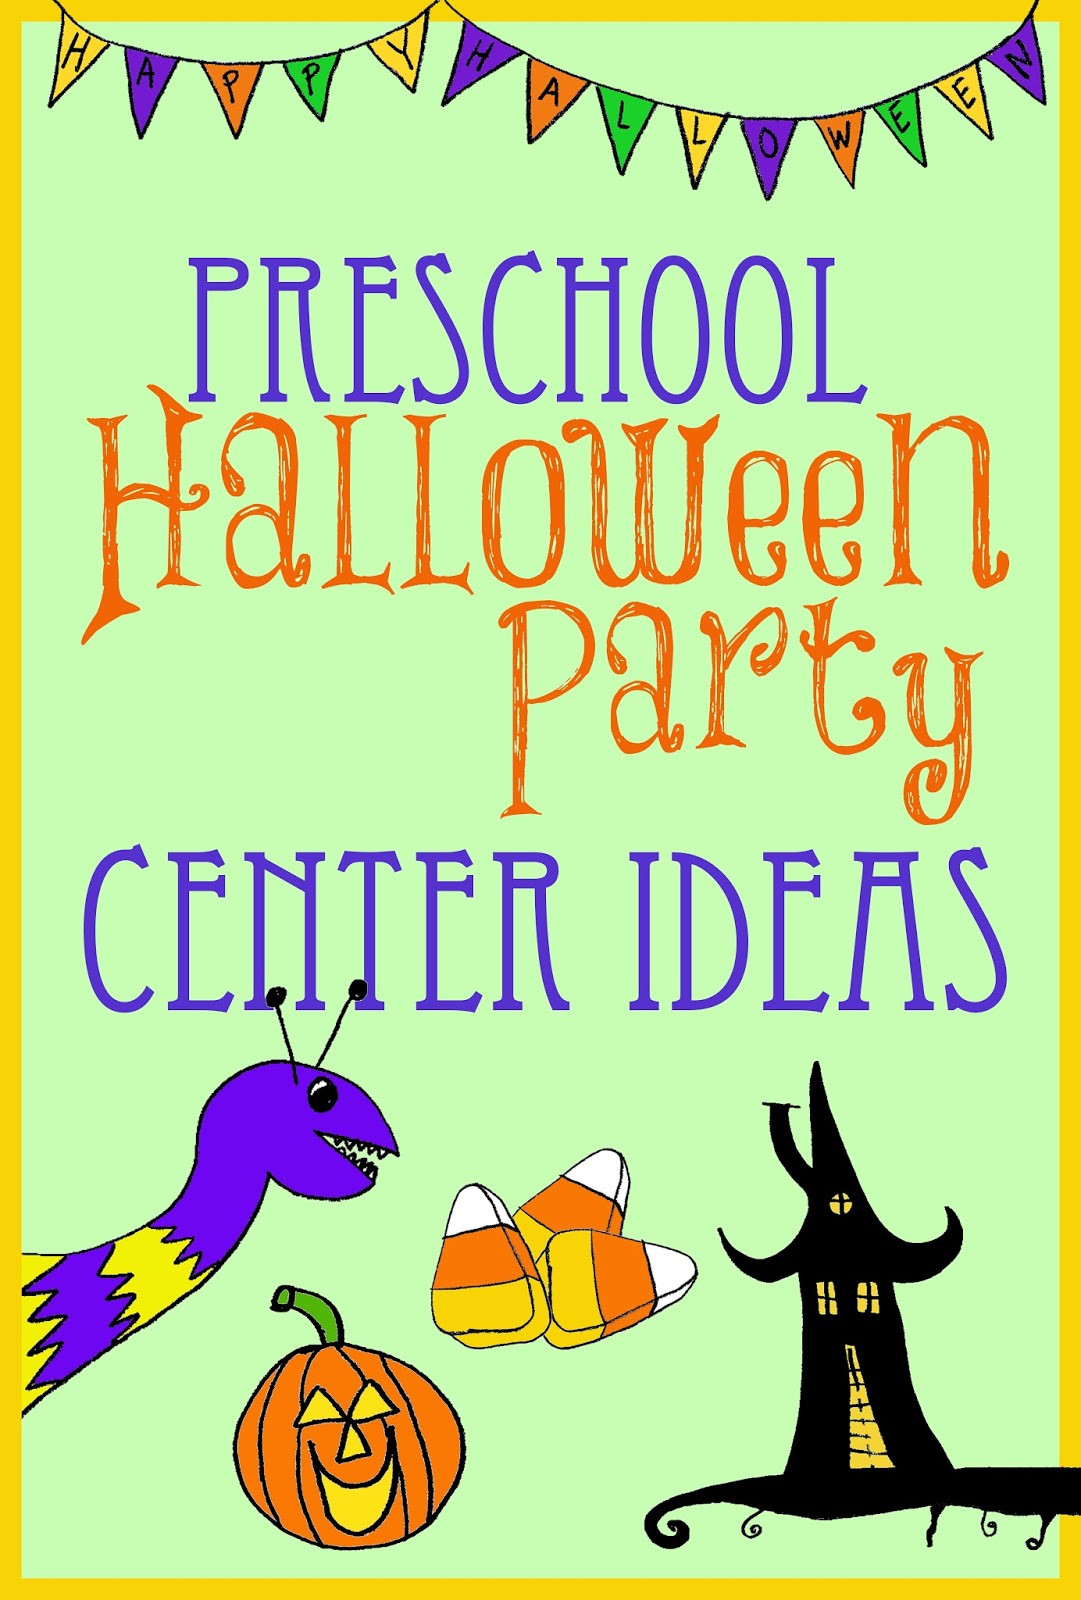 Preschool Halloween Party Game Ideas
 Halloween Party Center Ideas for Preschool Kindergarten